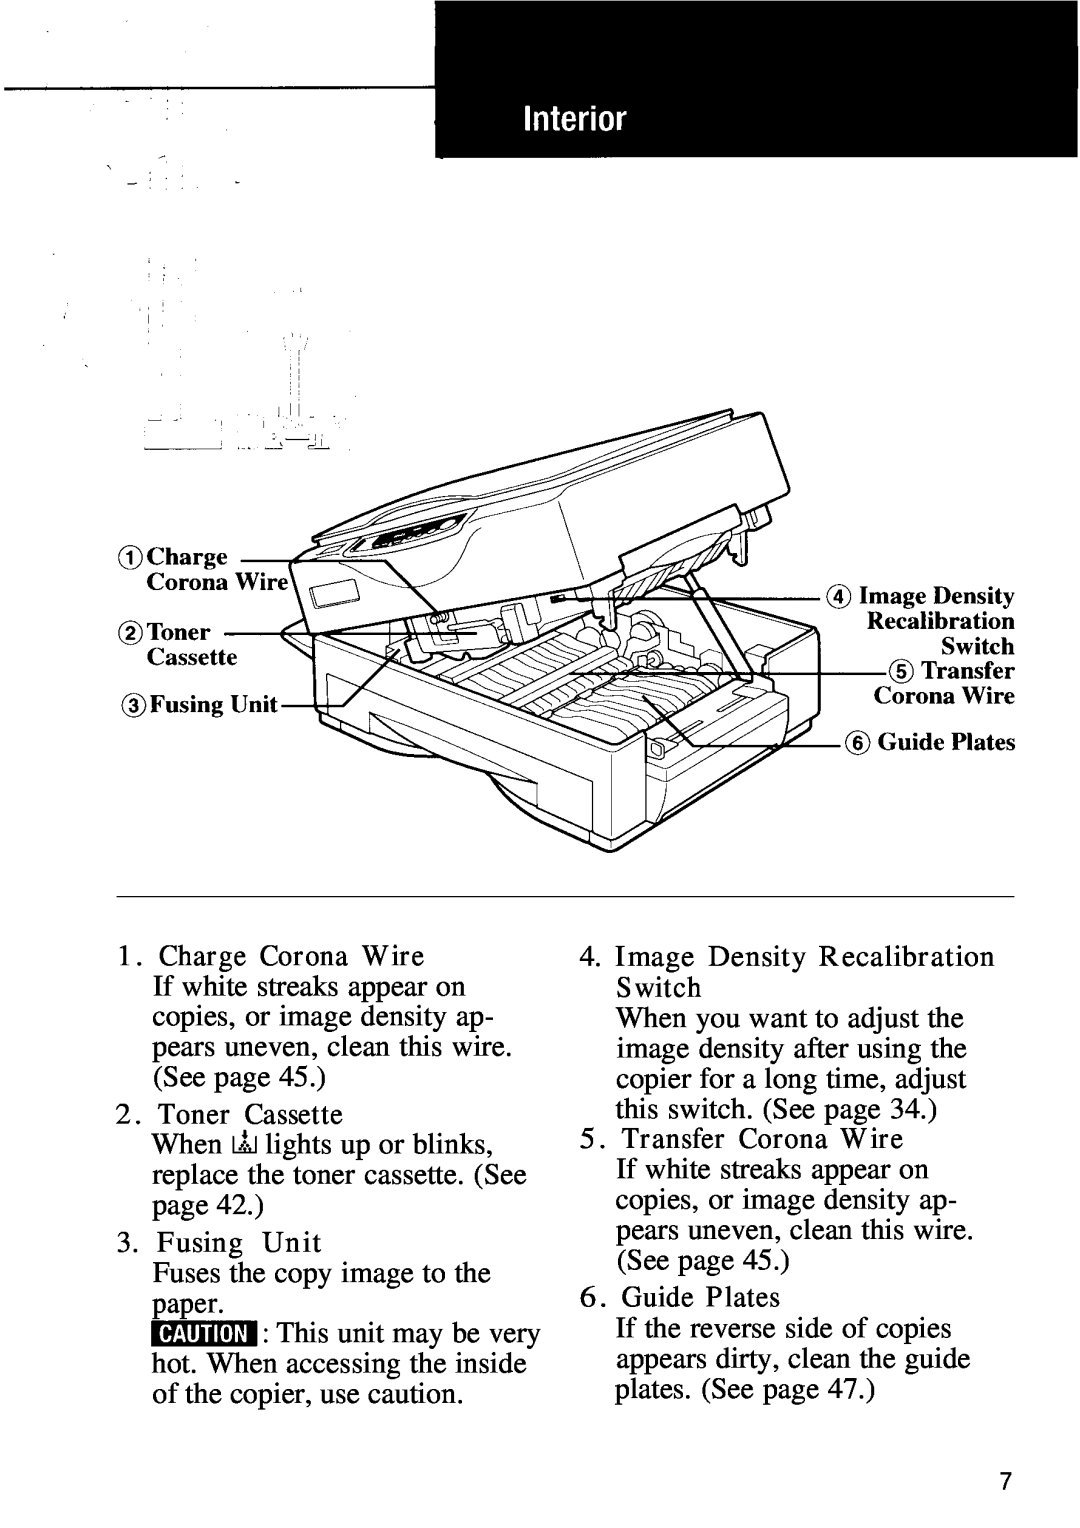 Ricoh 1008, FT1208 manual Toner Cassette, Fusing Unit, Image Density Recalibration Switch, Guide Plates 